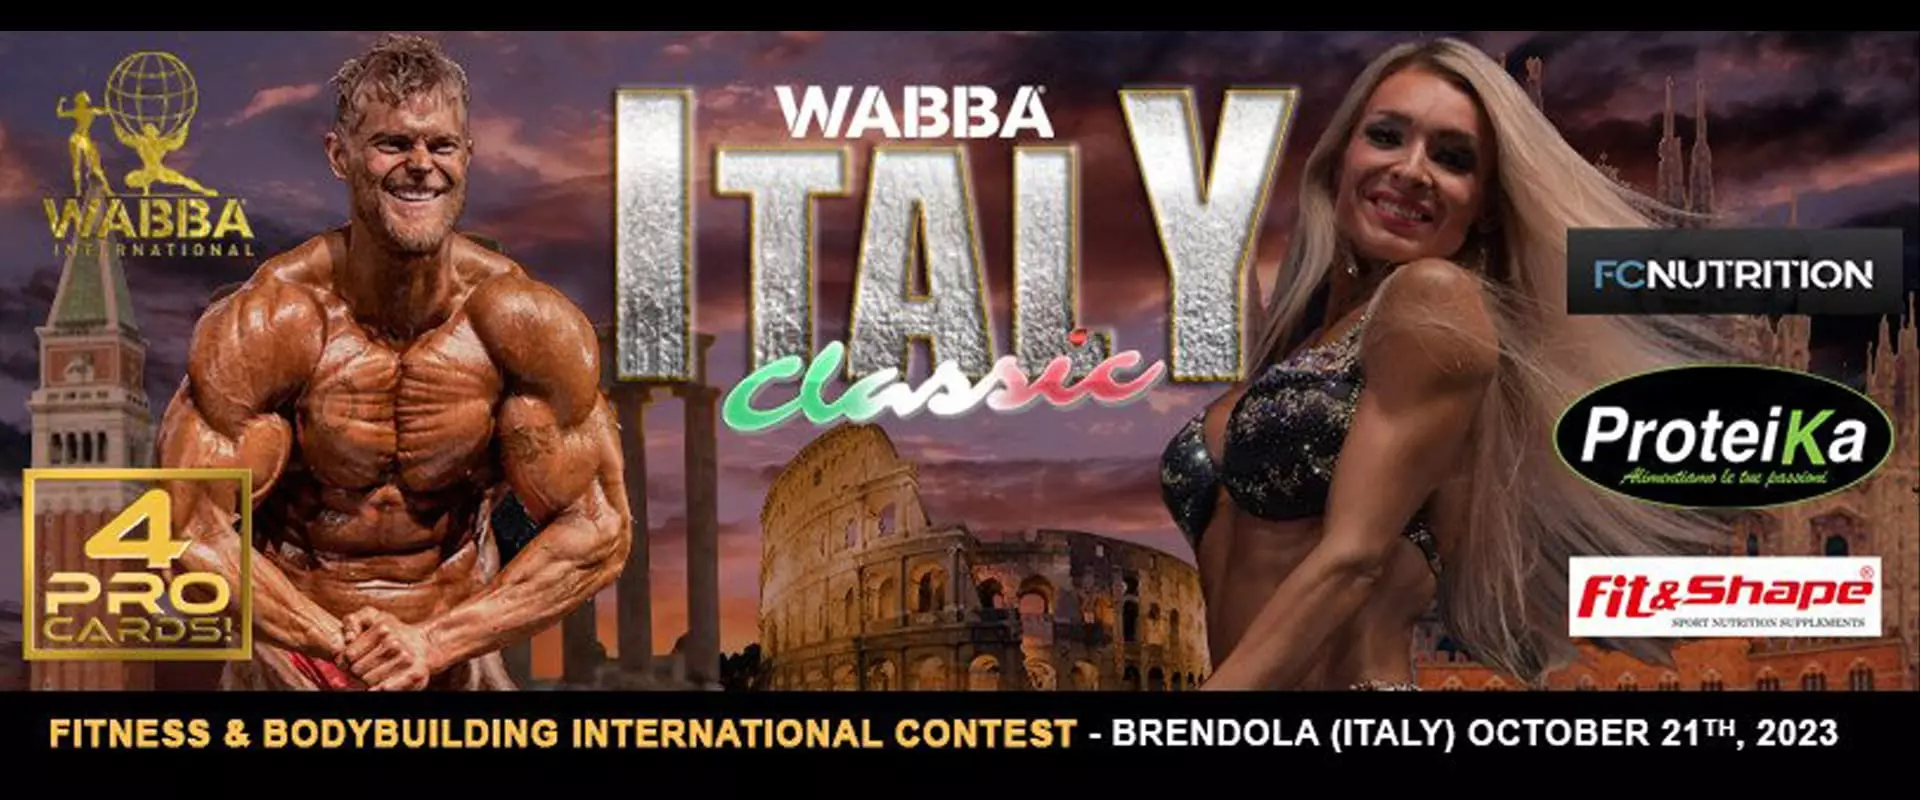 Wabba Italy Classic 2023